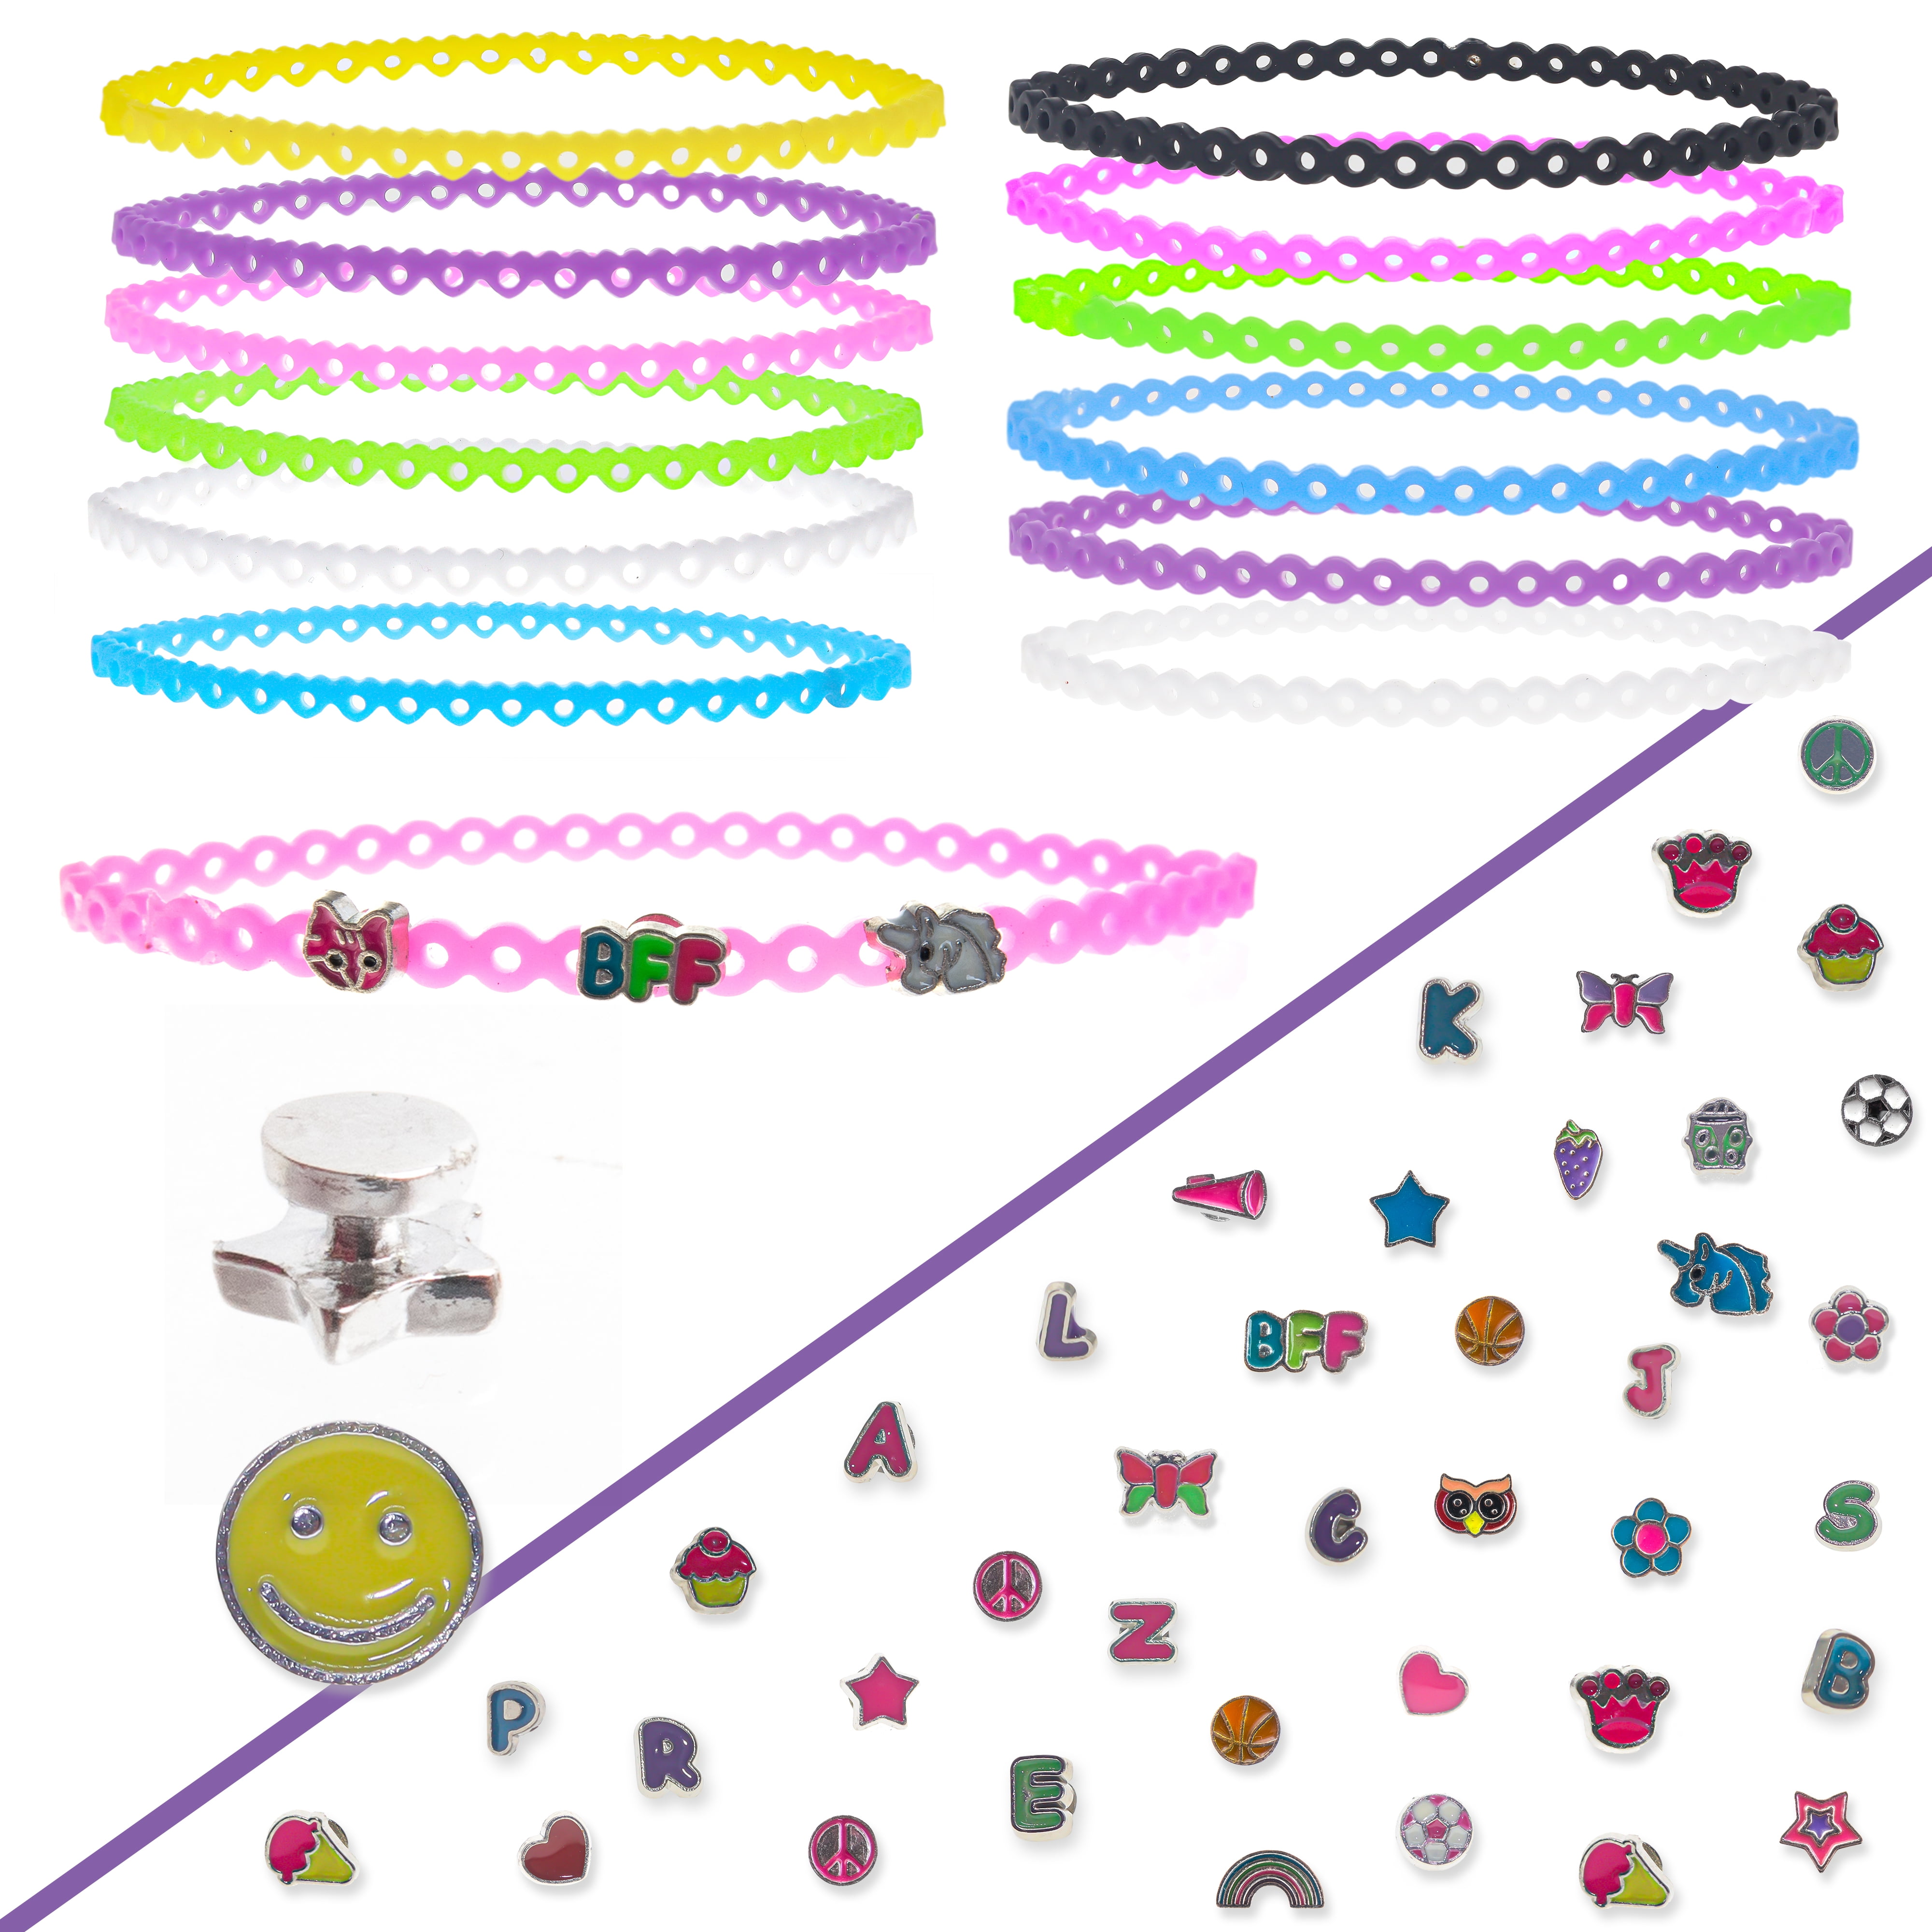 Nabance Jewellery Making Kit for Girls Charm Bracelet Making Set with Rainbow 